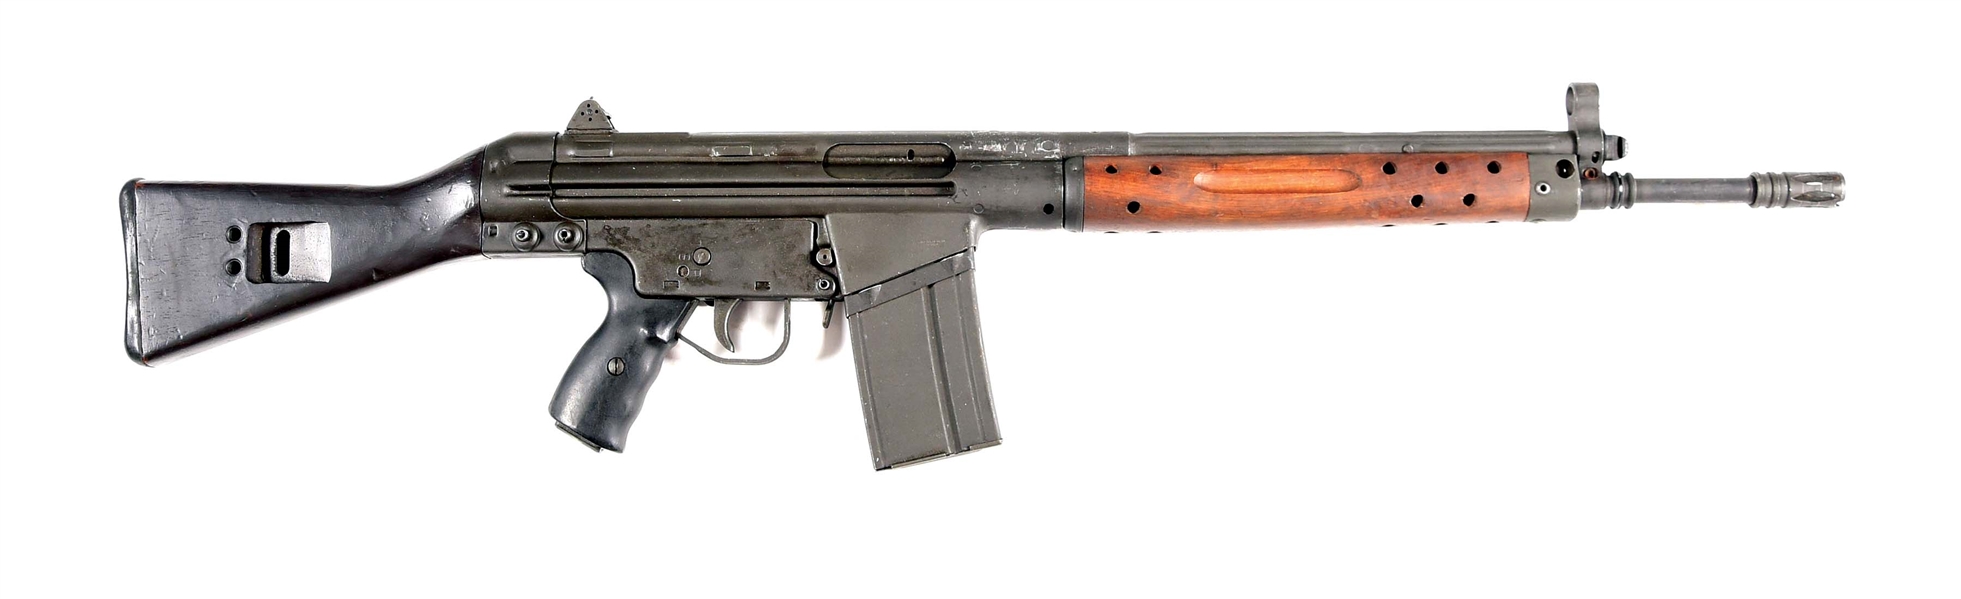 (N) R/M EQUIPMENT INC MODEL C CETME SELECT FIRE MACHINE GUN (PRE-86 DEALER SAMPLE).